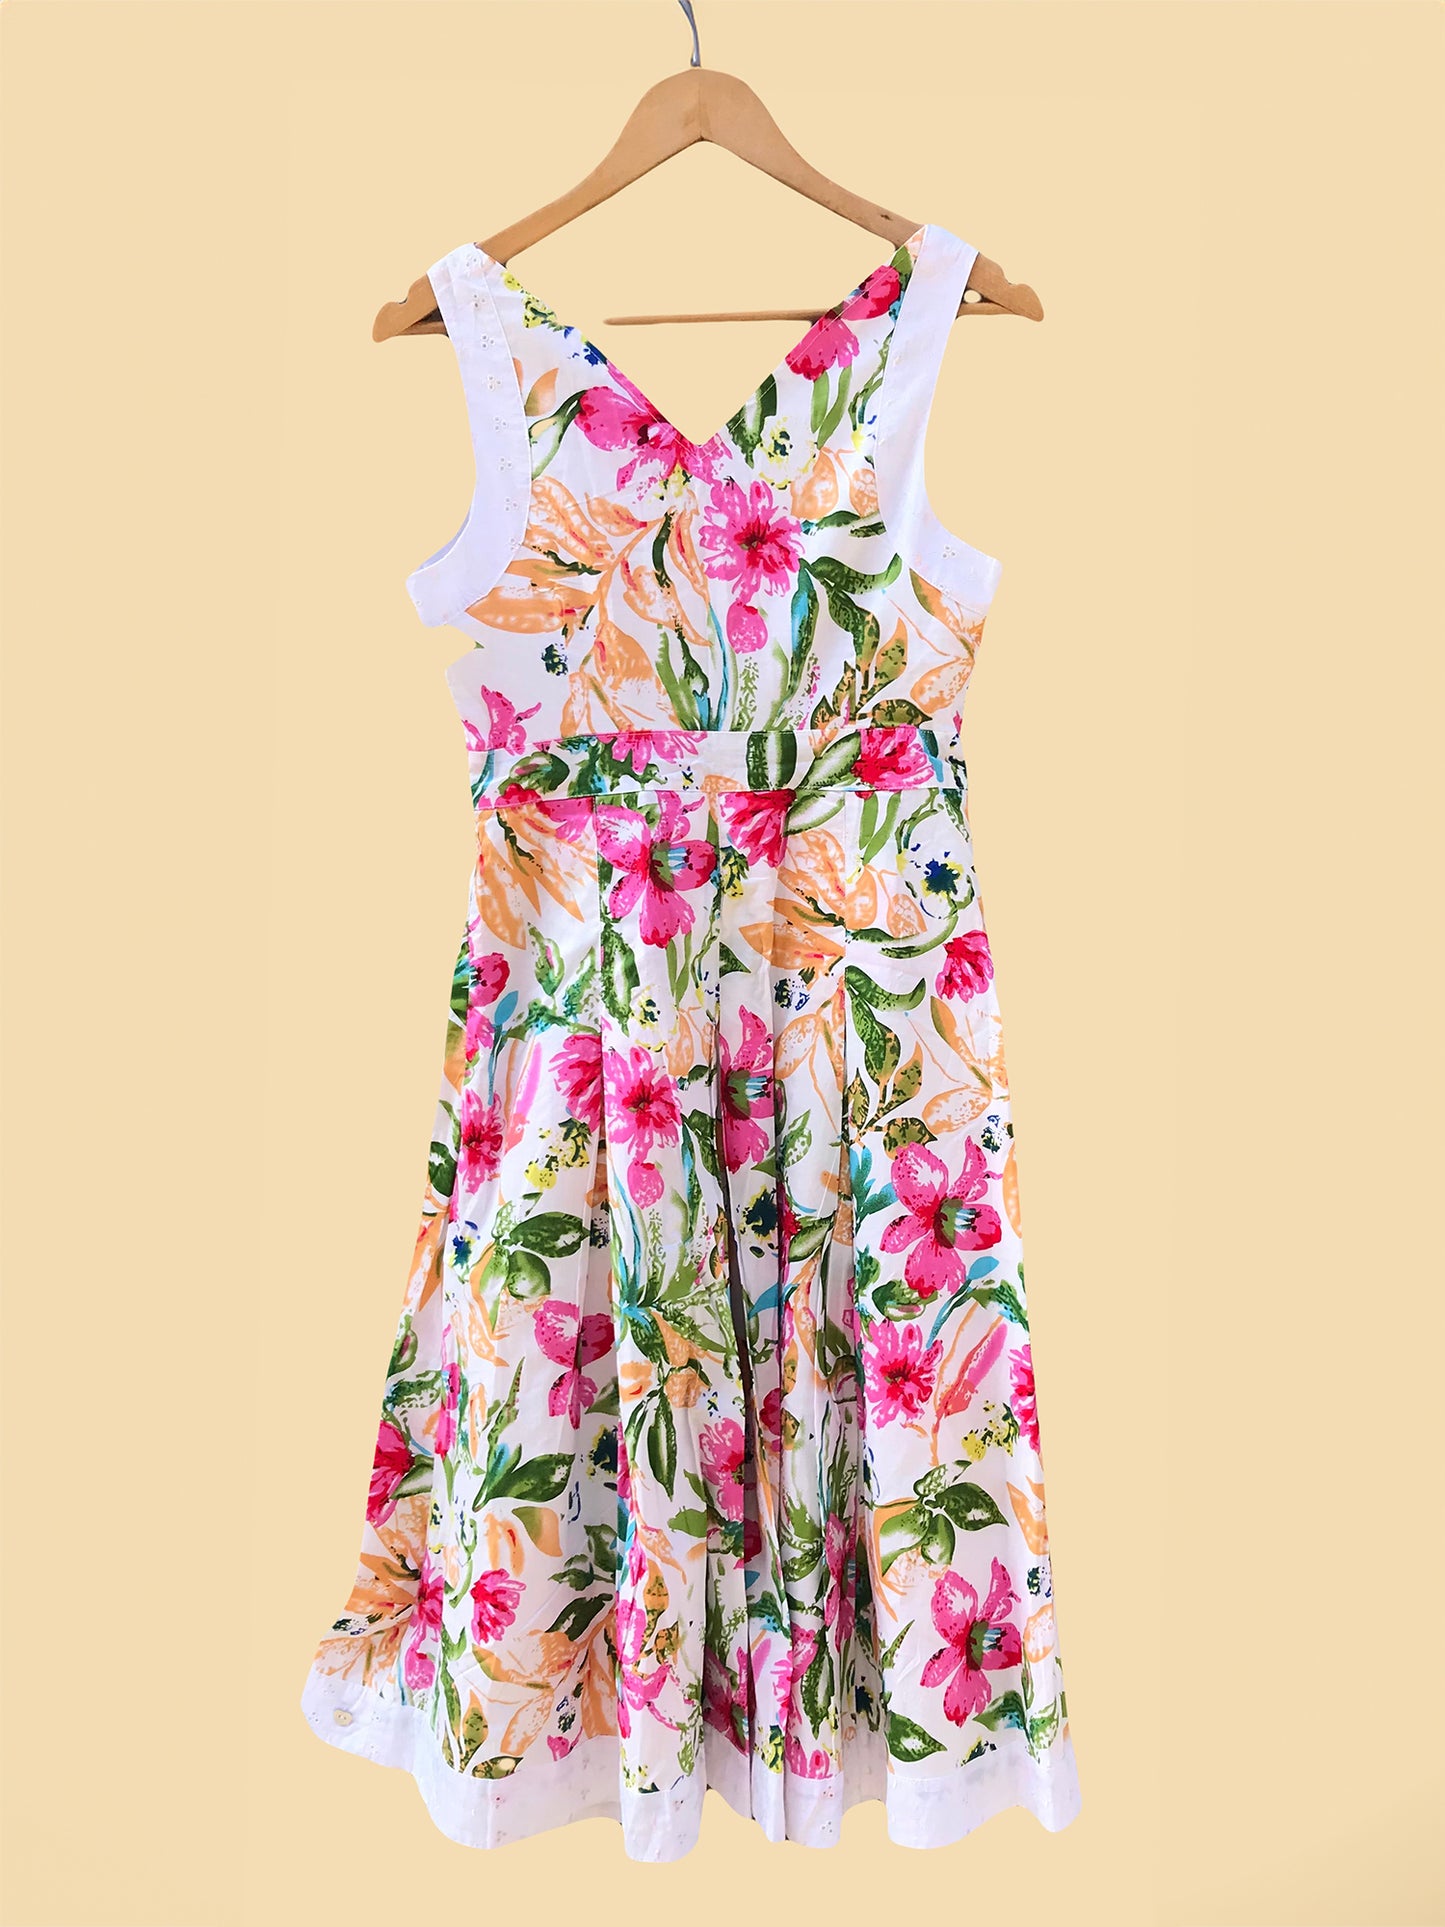 BNWT Joe Browns Size 10 Floral Dress